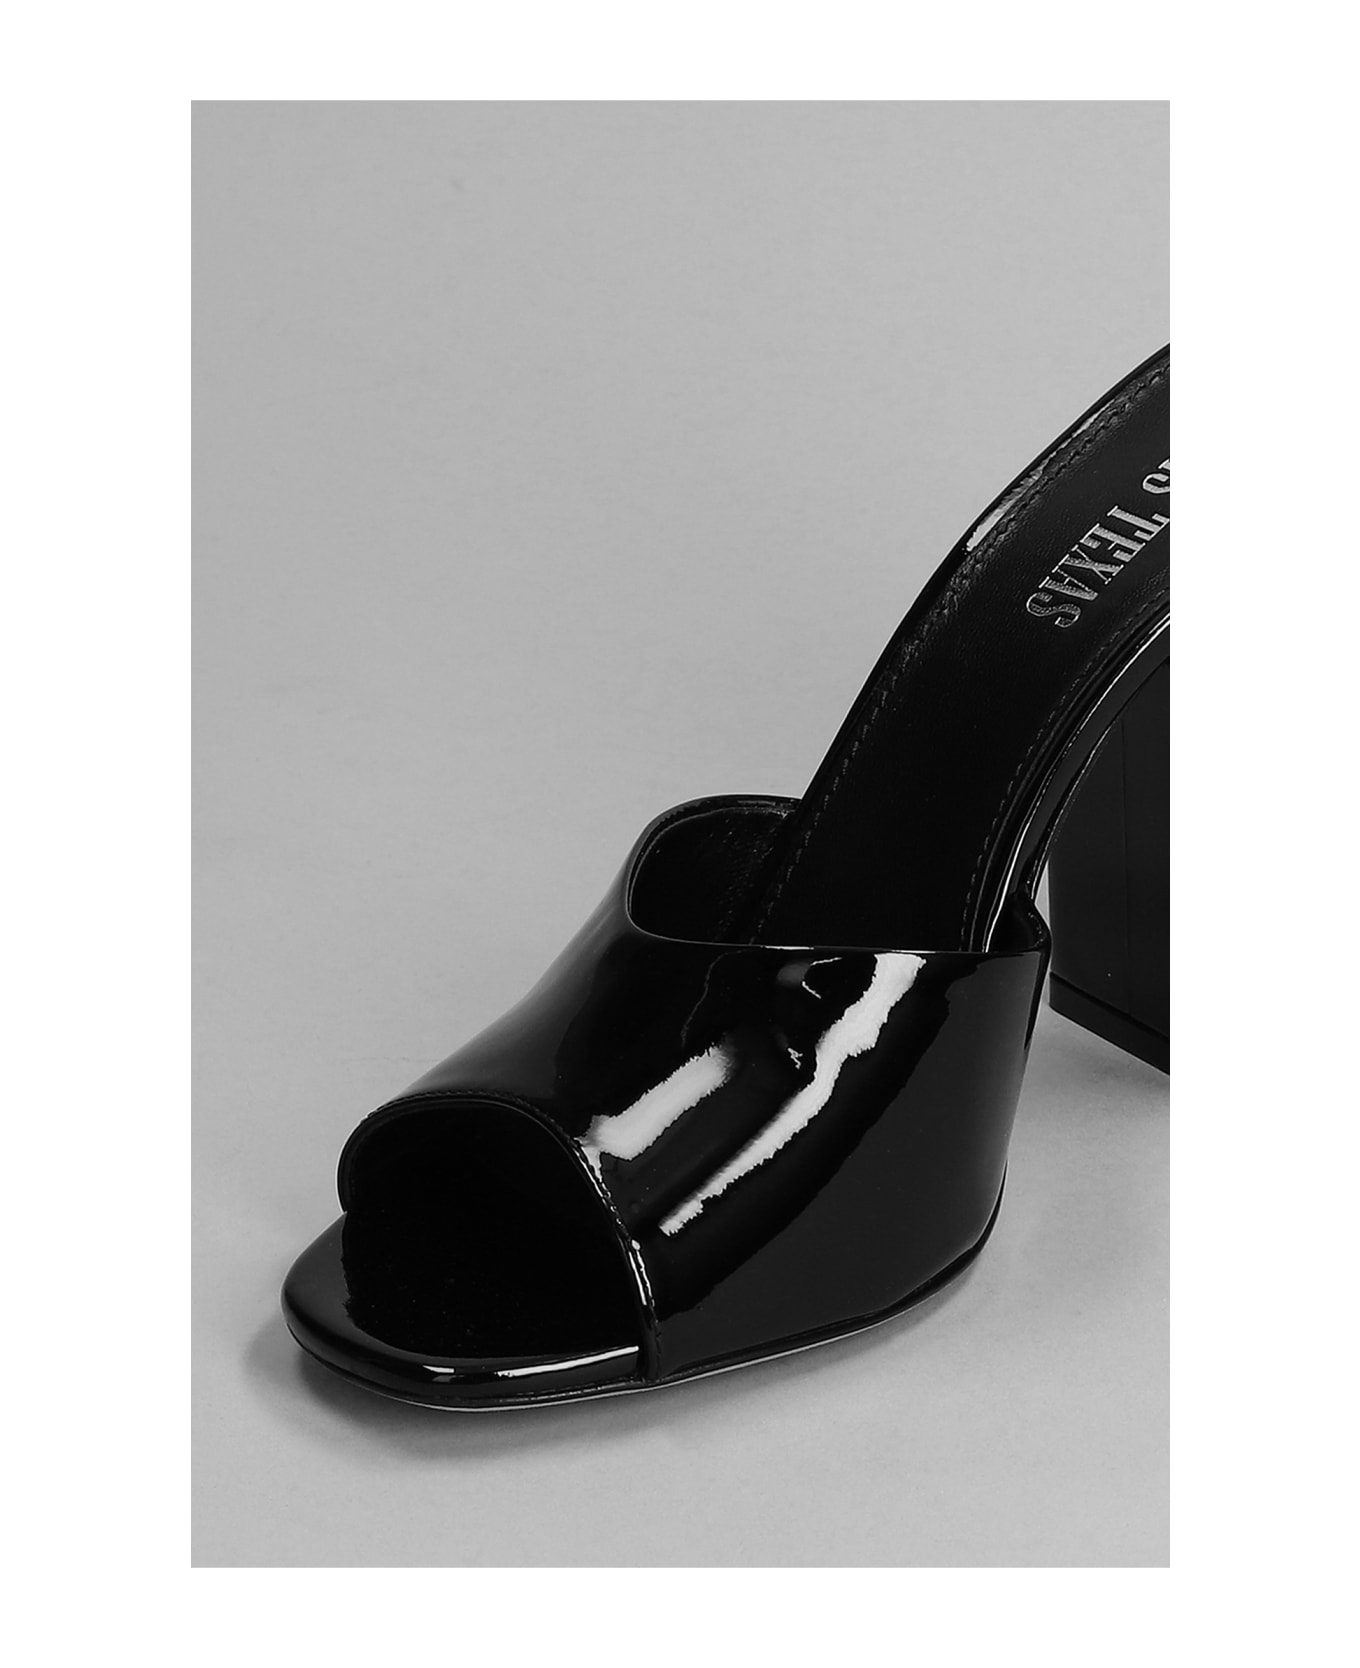 Paris Texas Anja Sandals In Black Patent Leather - black